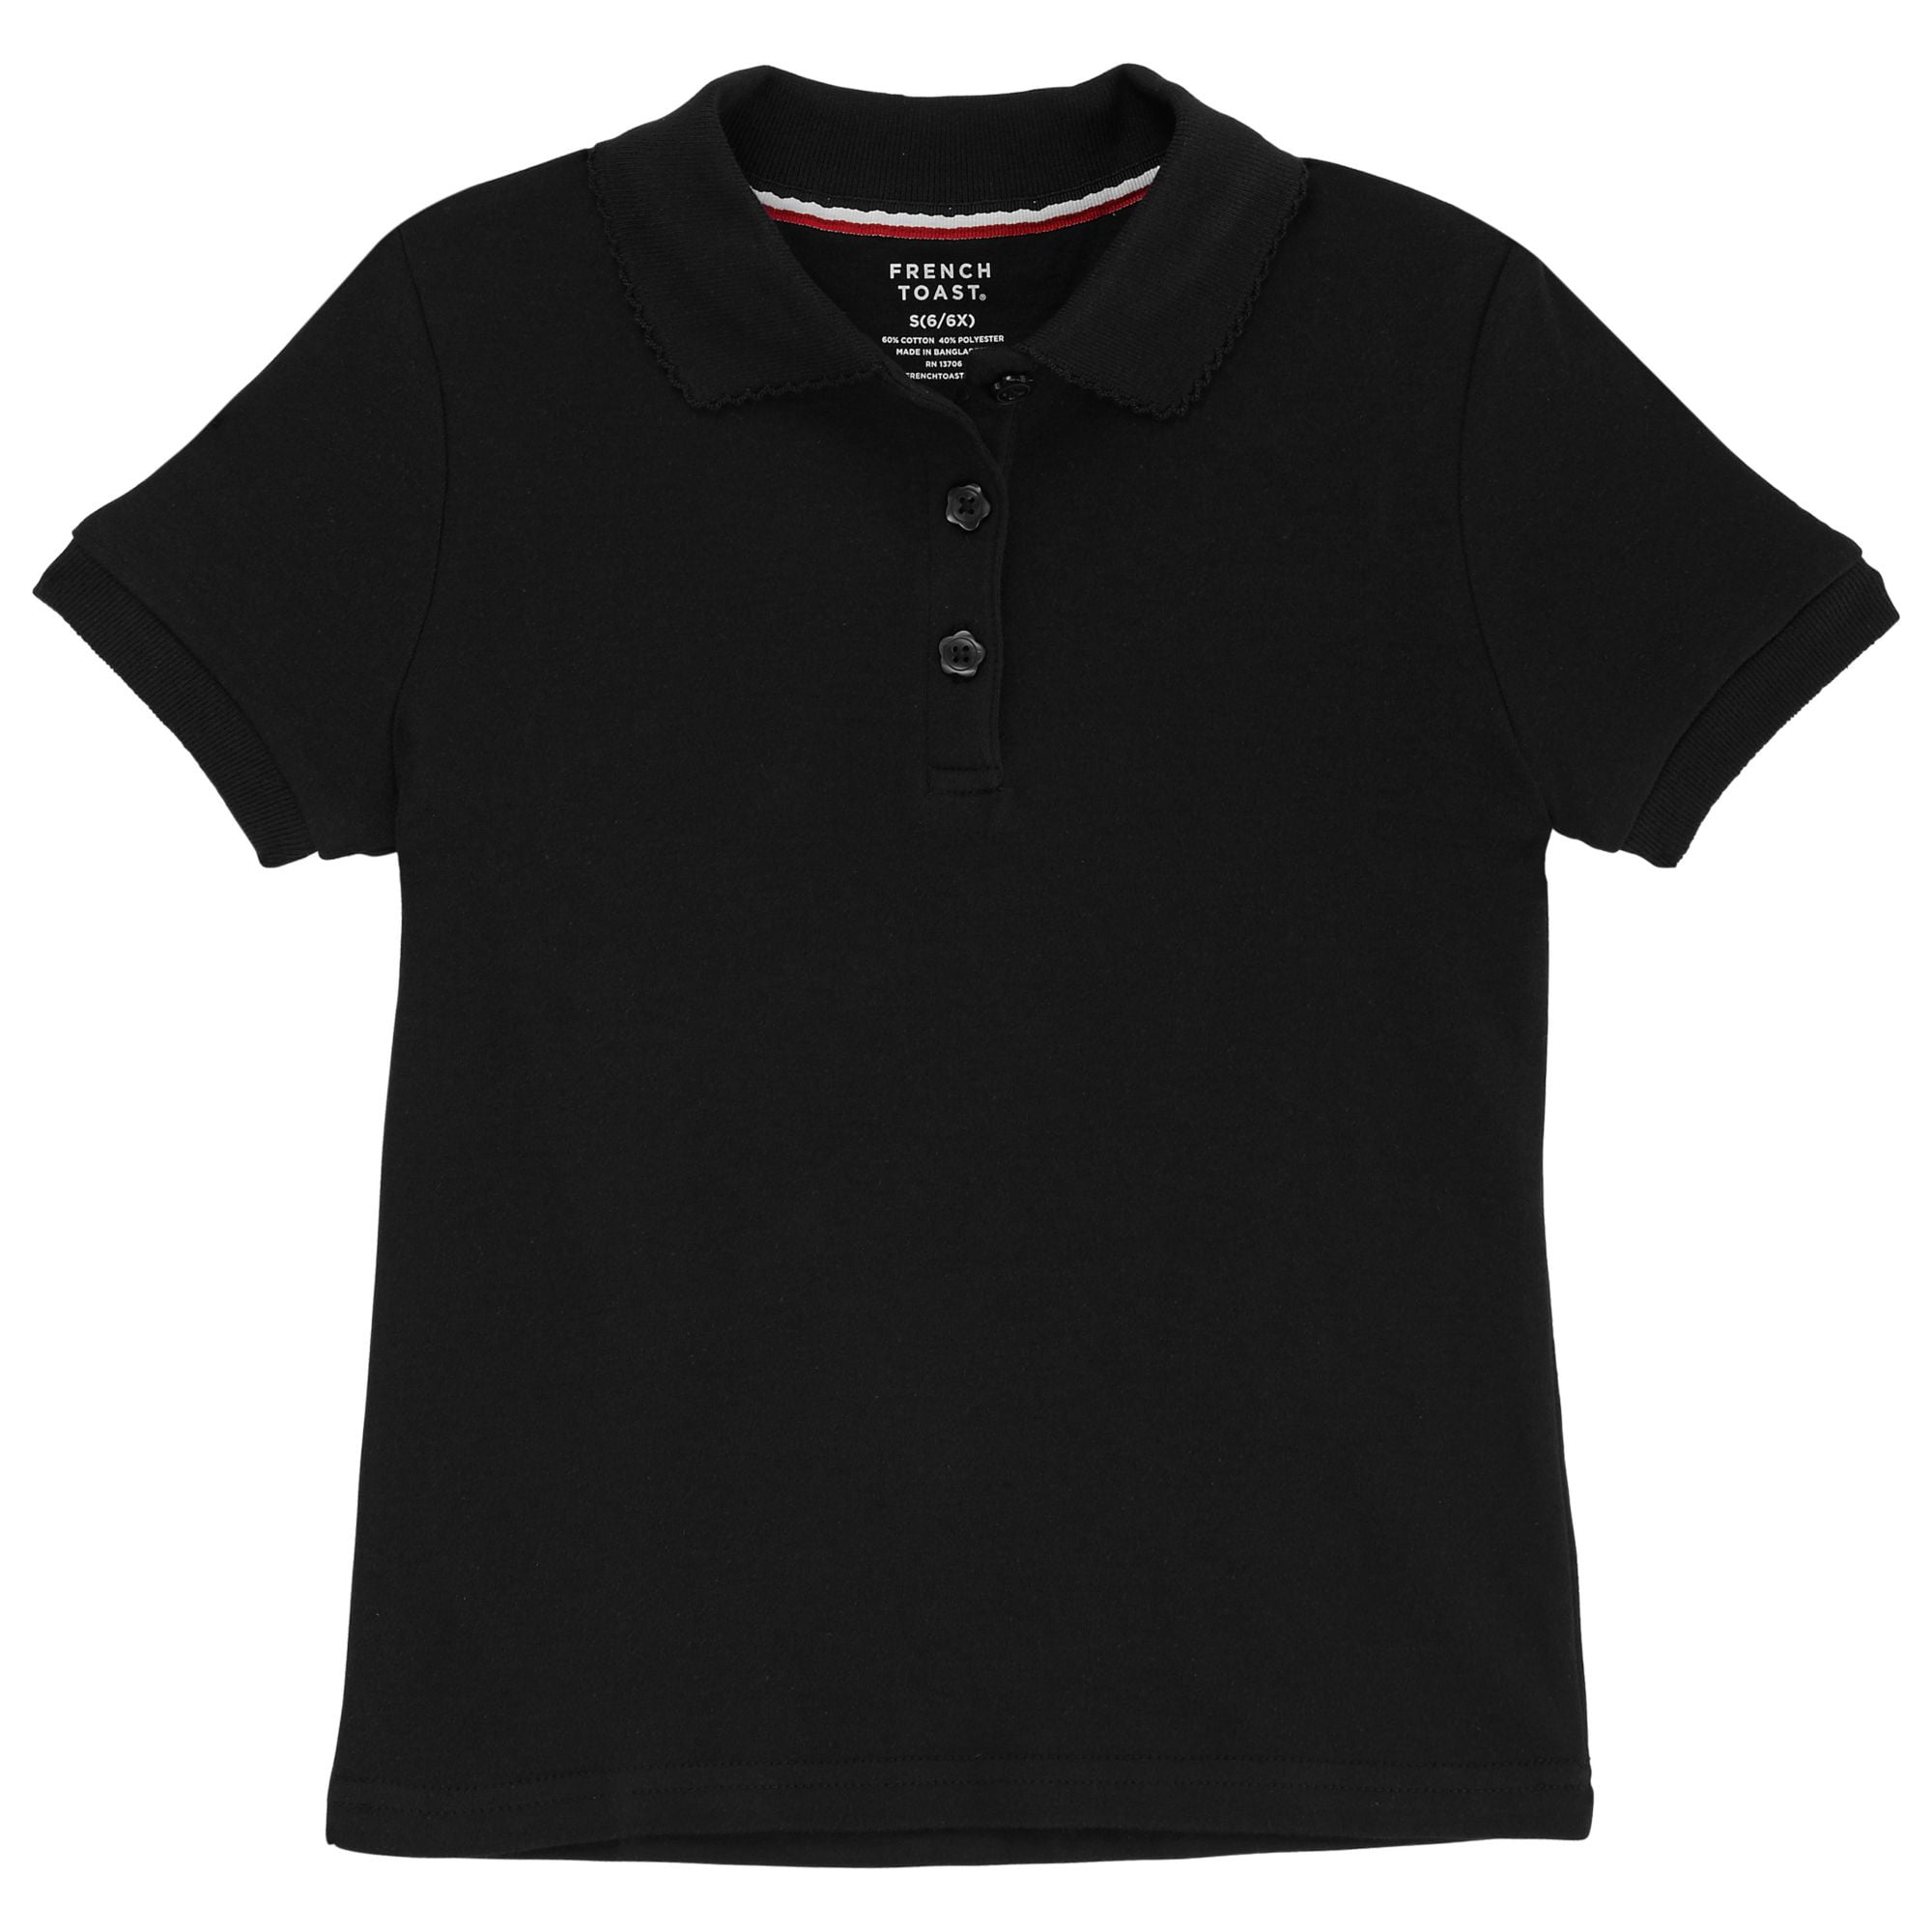 Essentials Girls Short-Sleeve Uniform Interlock Polo 